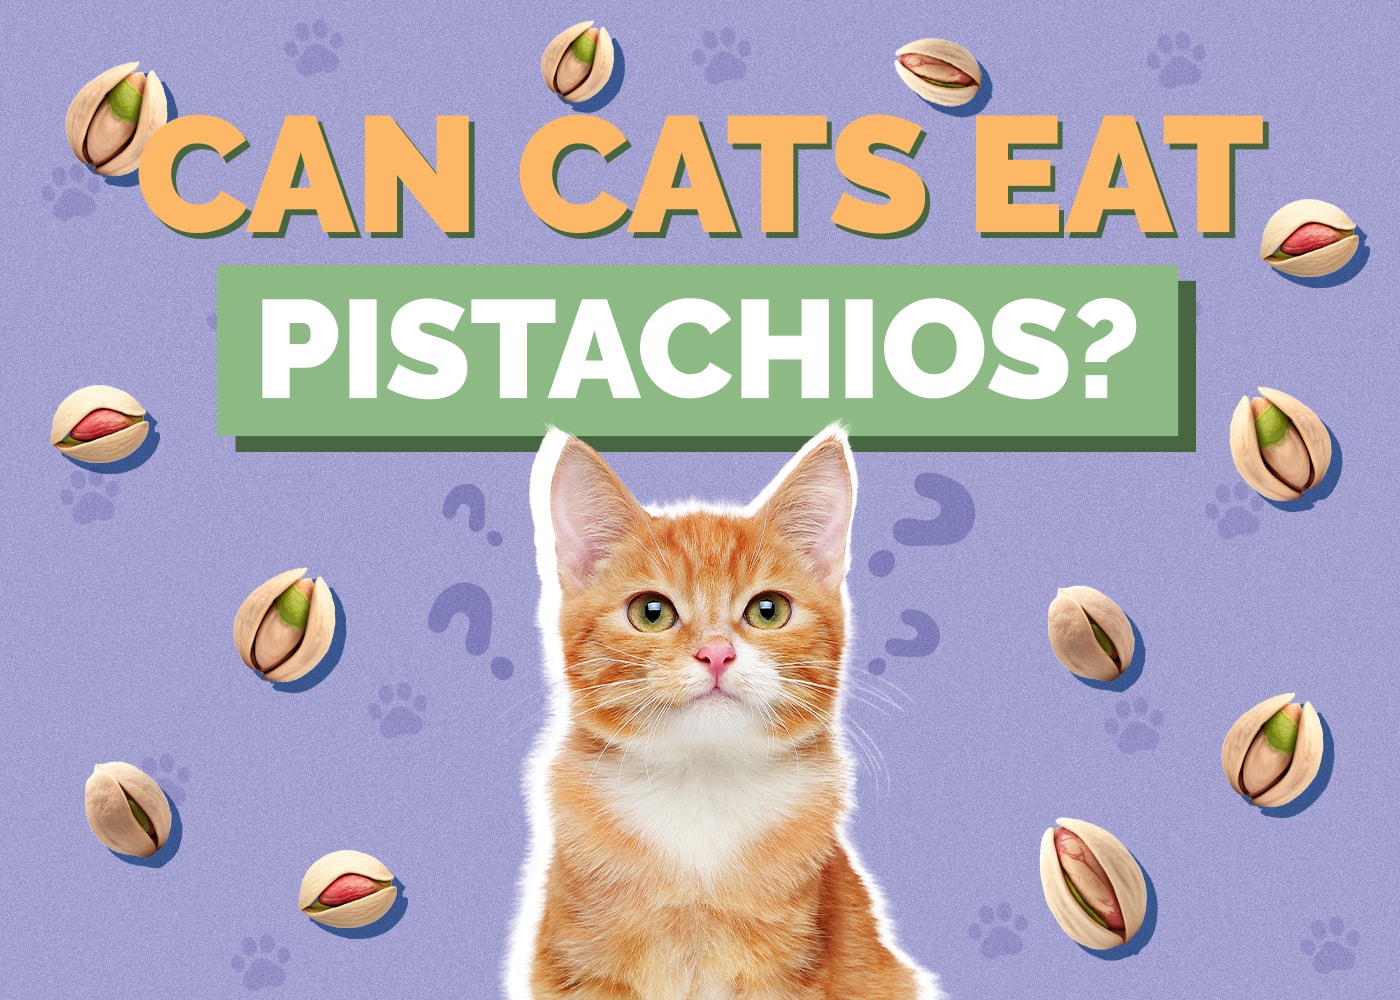 Can Cats Eat pistachios